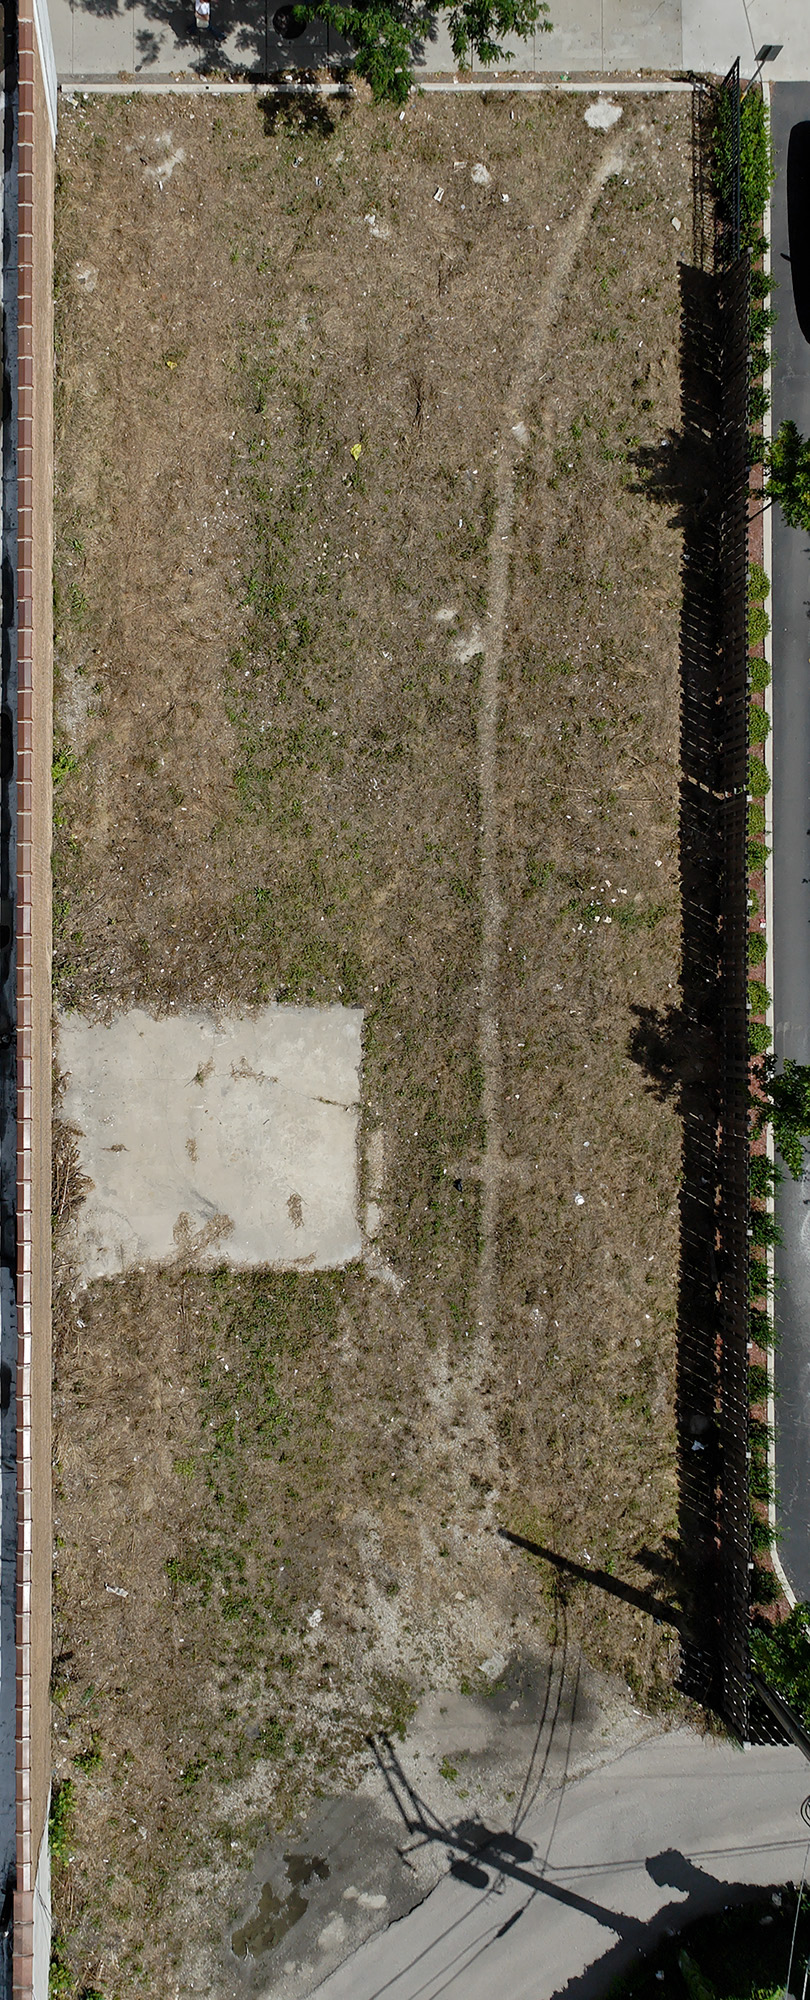 chicago Aerial Photography Landscape Urban prairie terrain vague empty lots installation